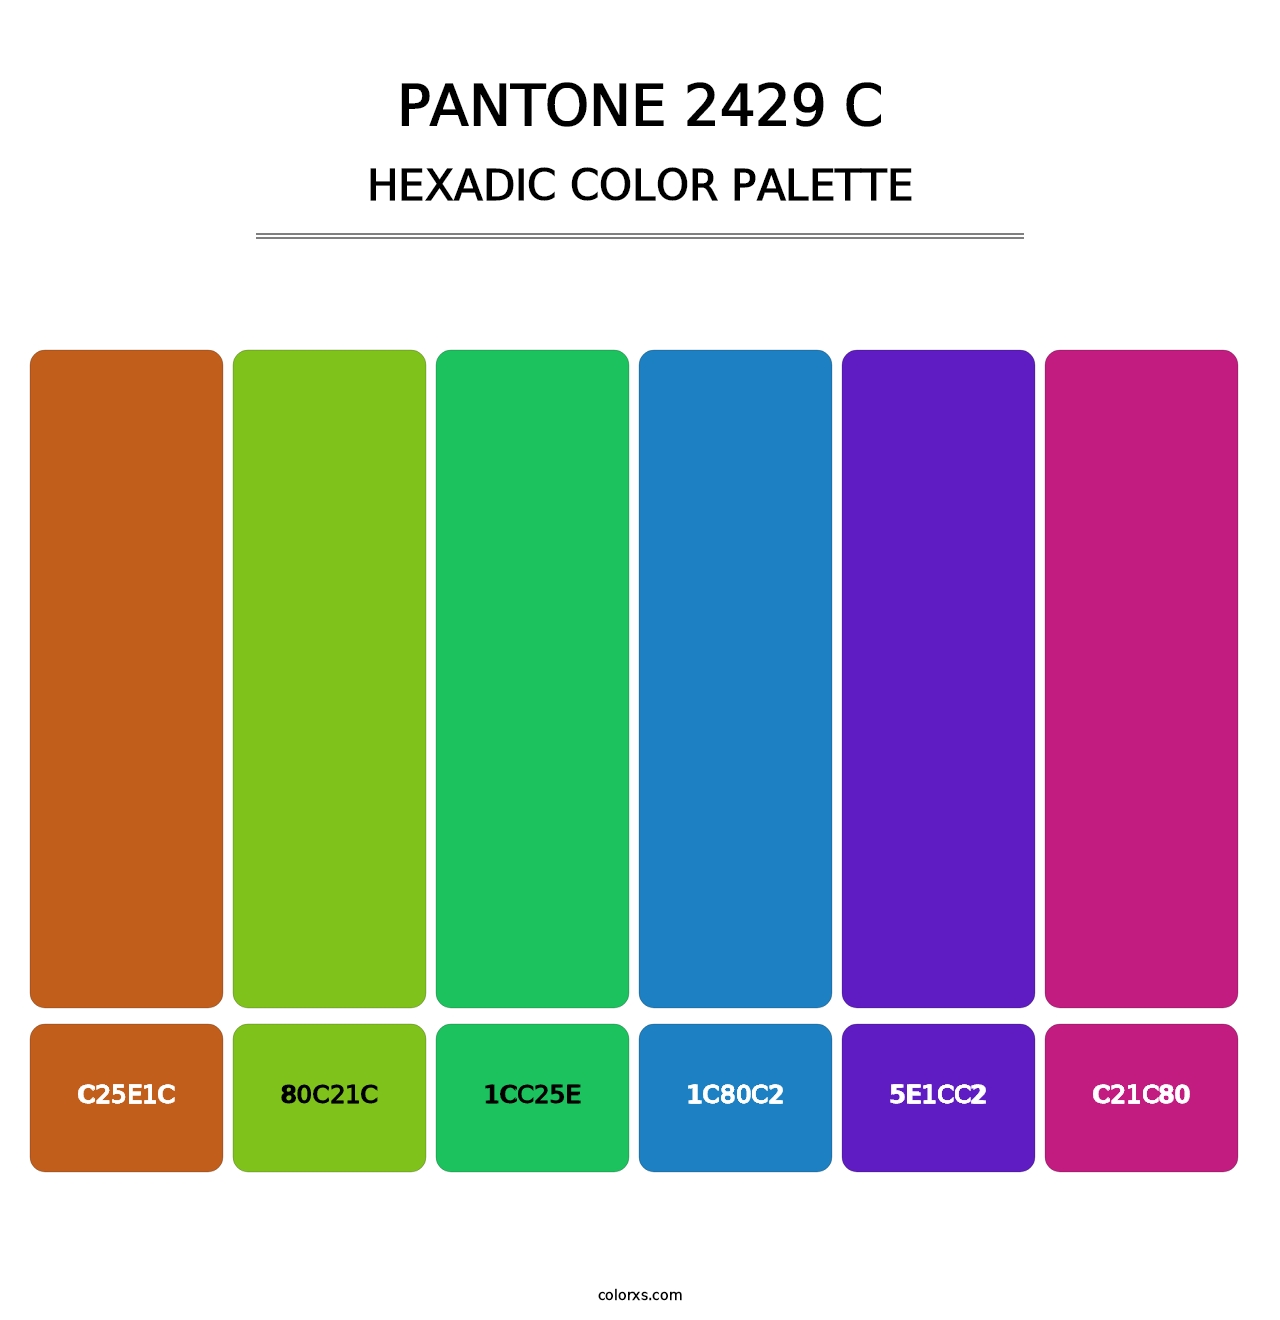 PANTONE 2429 C - Hexadic Color Palette